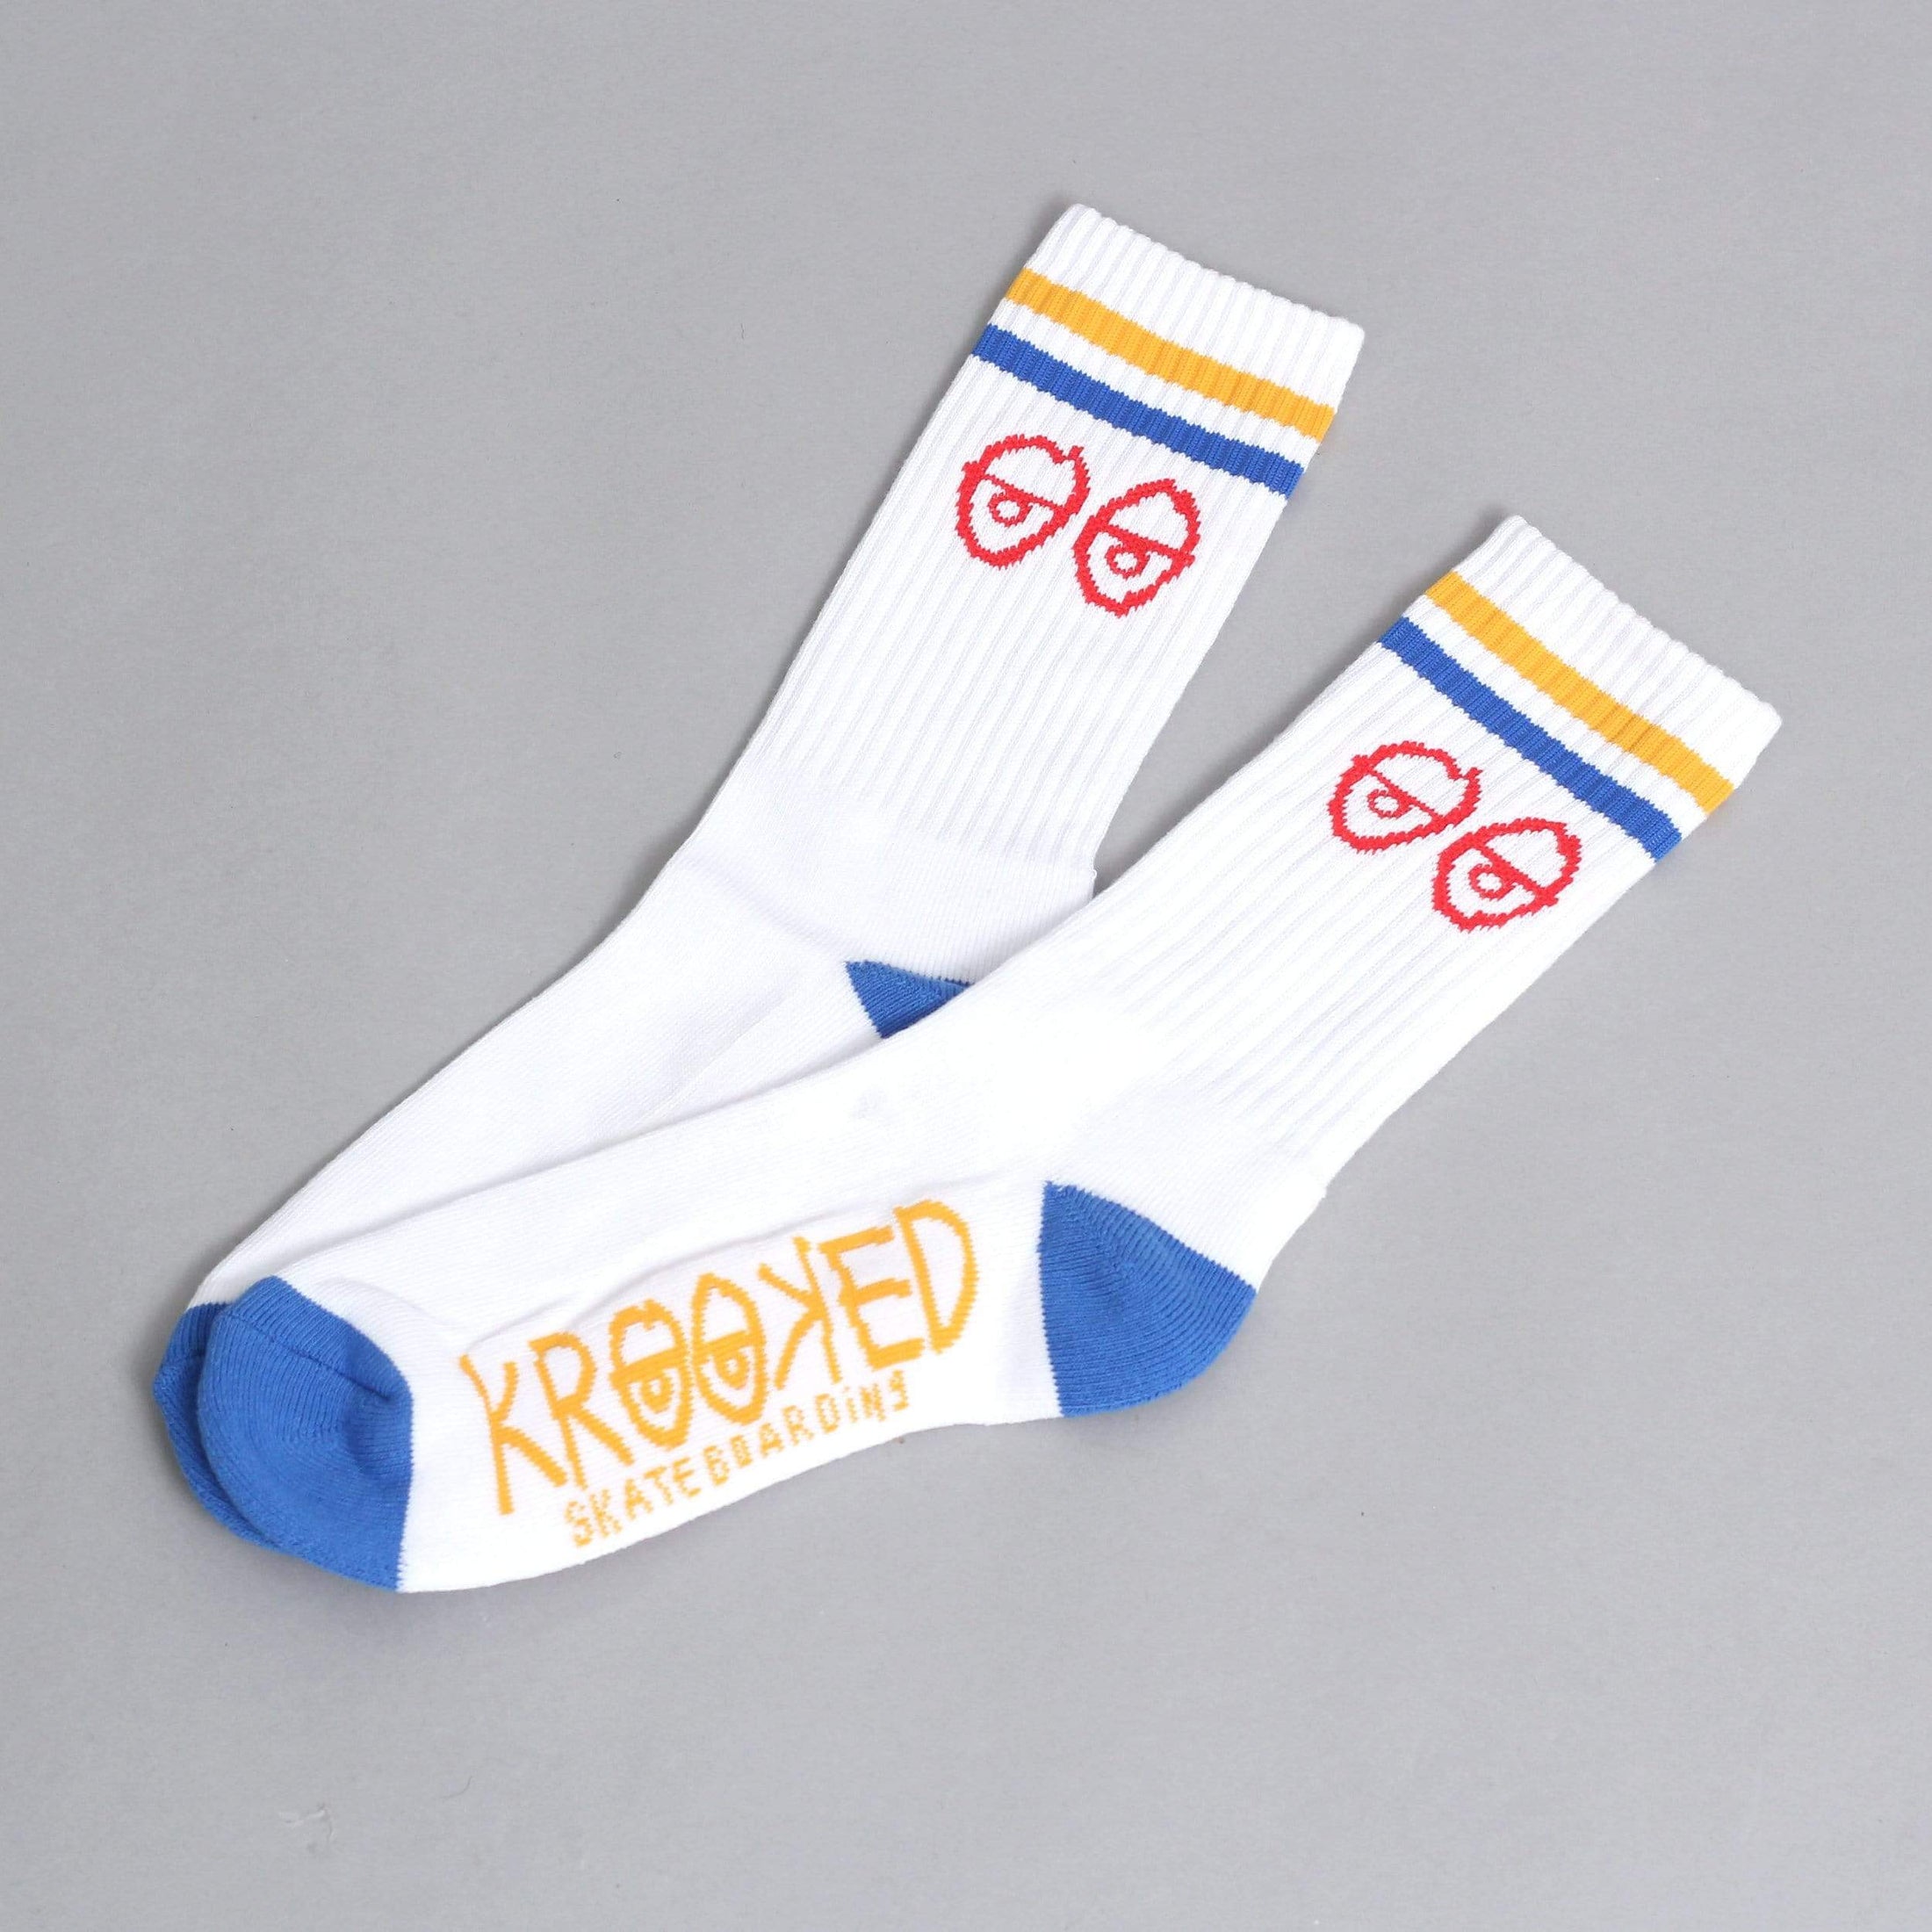 Krooked Kr Eyes Socks White / Yellow / Blue / Red